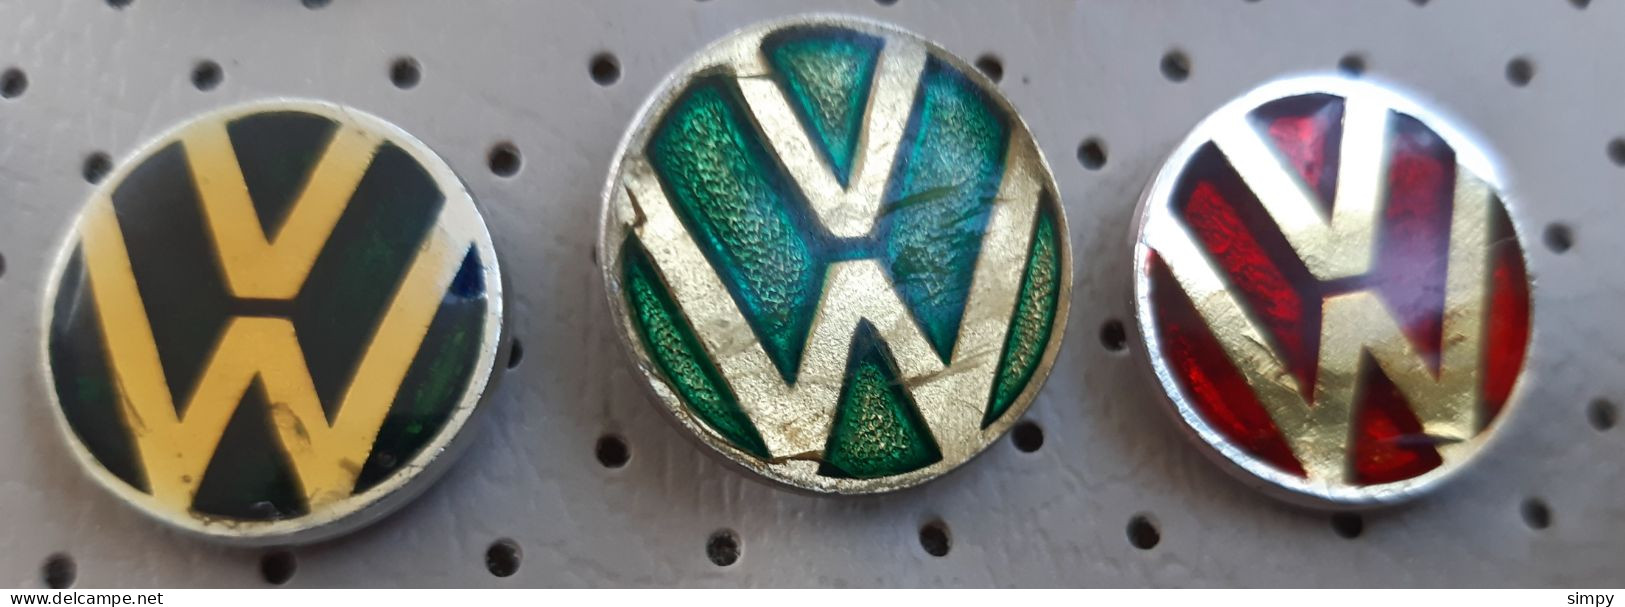 Volkswagen VW Car Logo Vintage Pins - Volkswagen